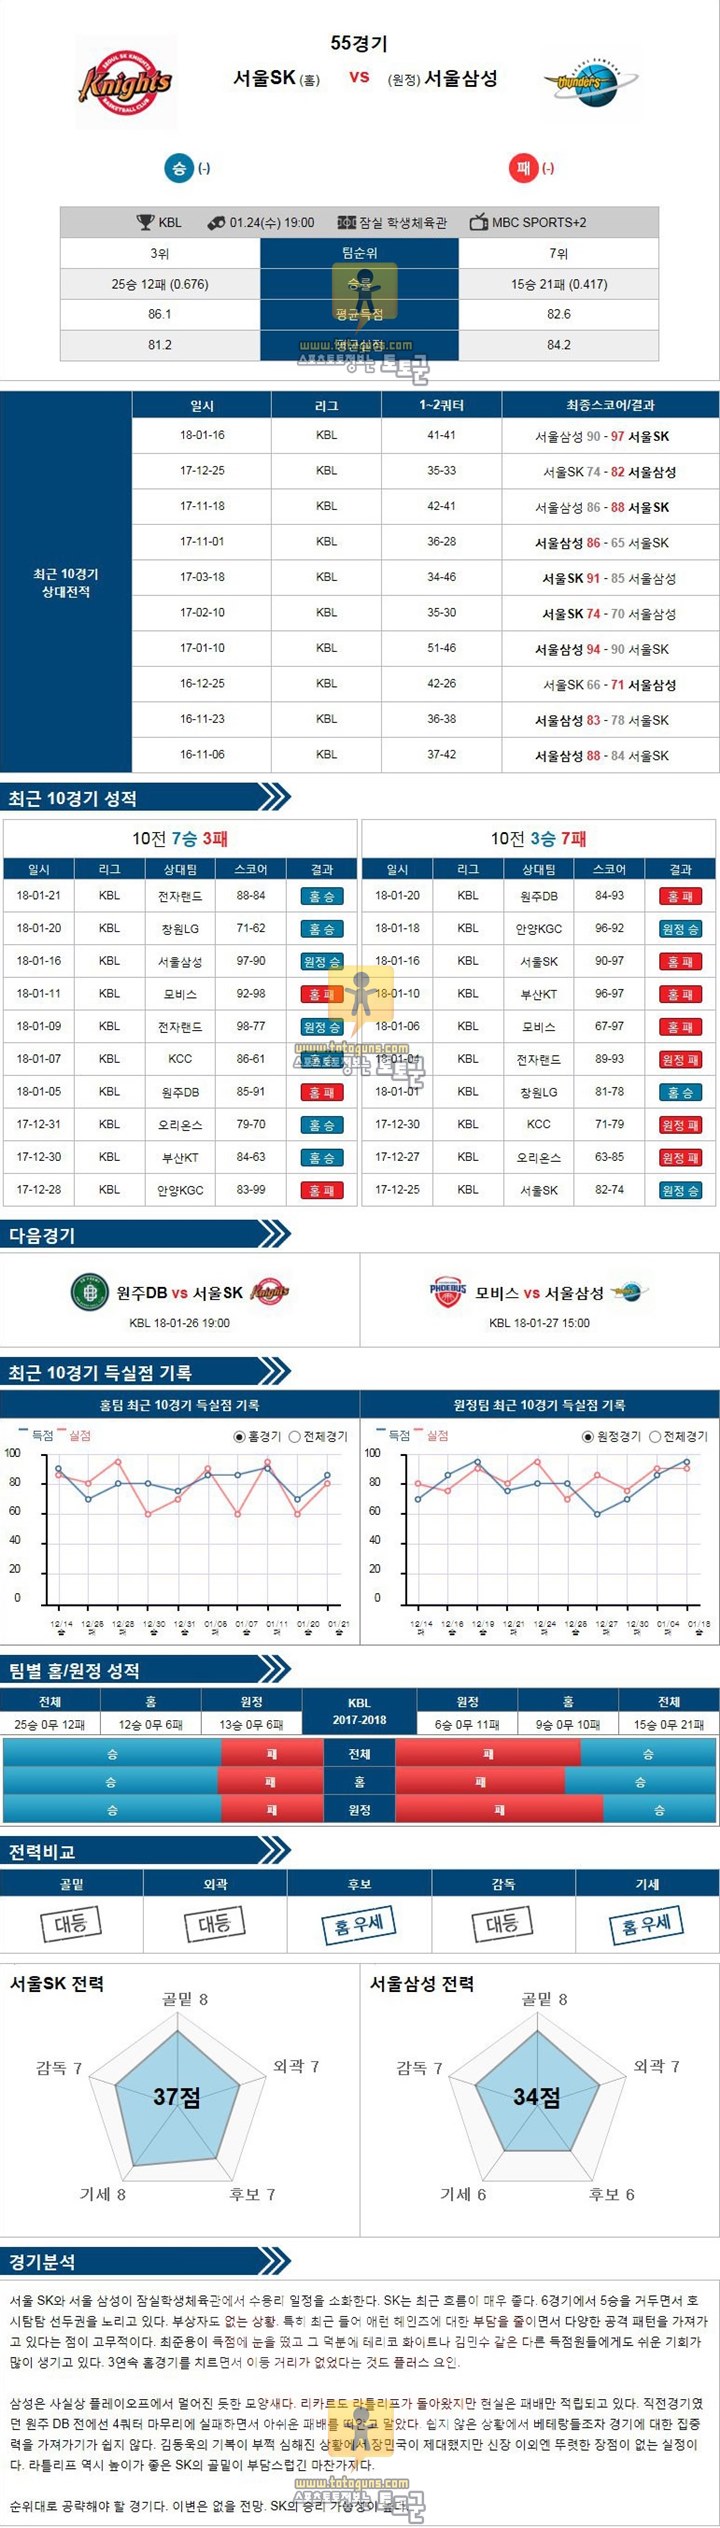 [KBL] 1월 24일 19:00 프로농구분석 서울SK vs 서울삼성